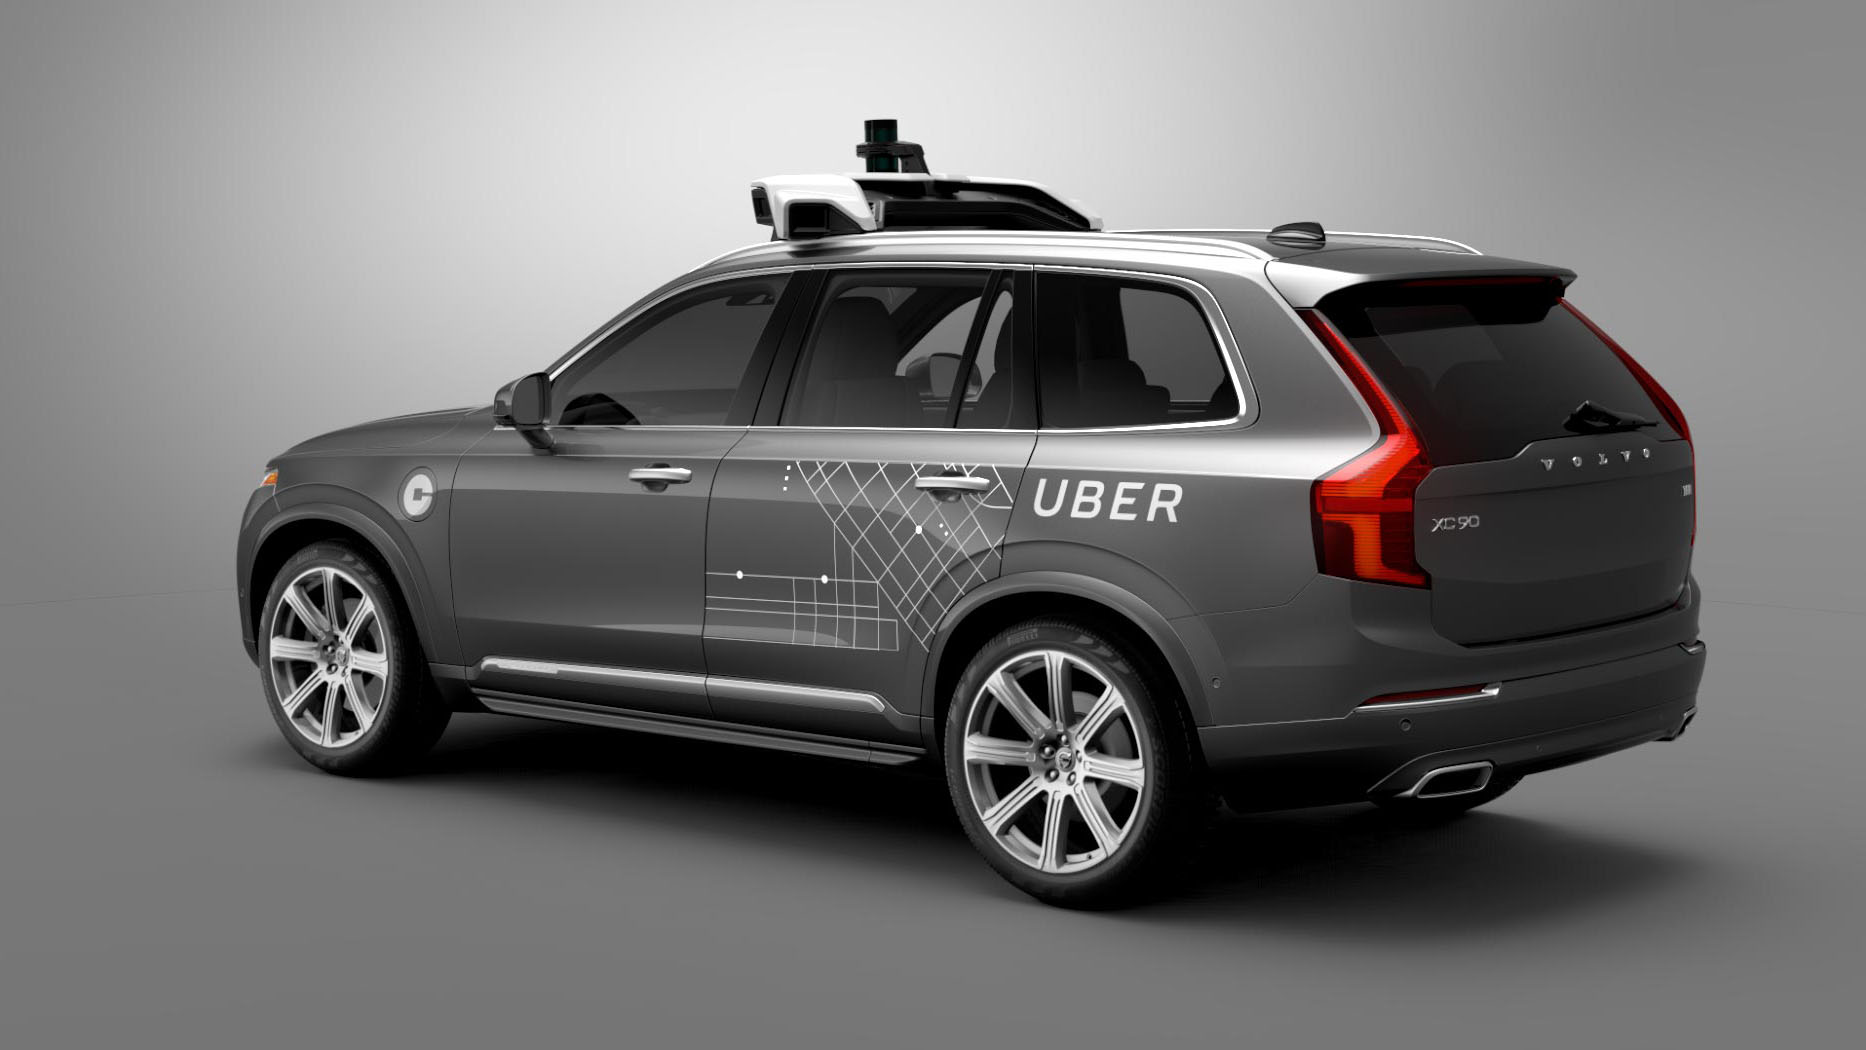 File:Self driving Uber prototype in San Francisco.jpg - Wikimedia Commons